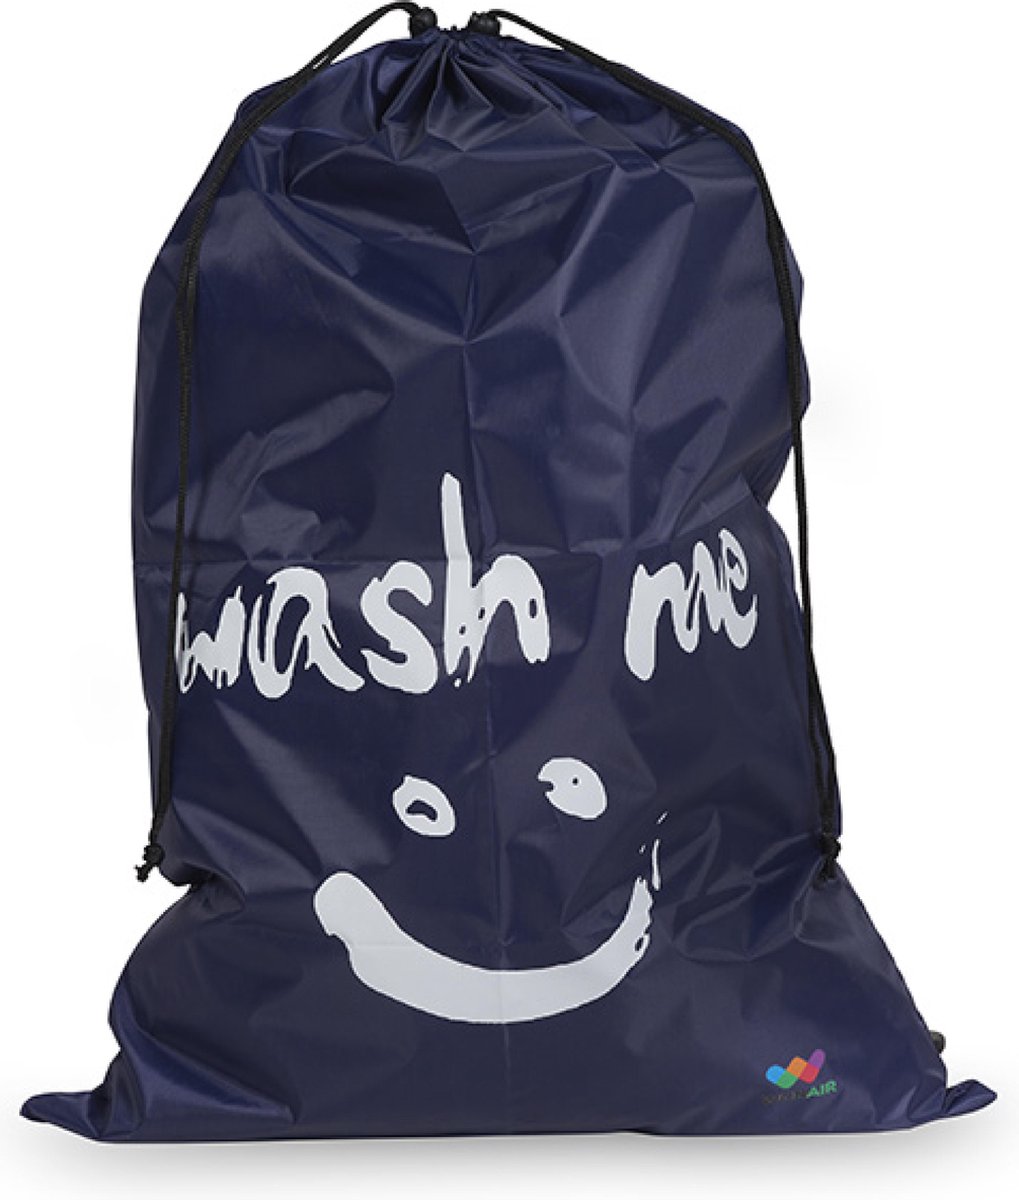 Wonair - Grote waszak - Laundry bag - Waszak camping - 60x90cm - Donkerblauw - Met trekkoord